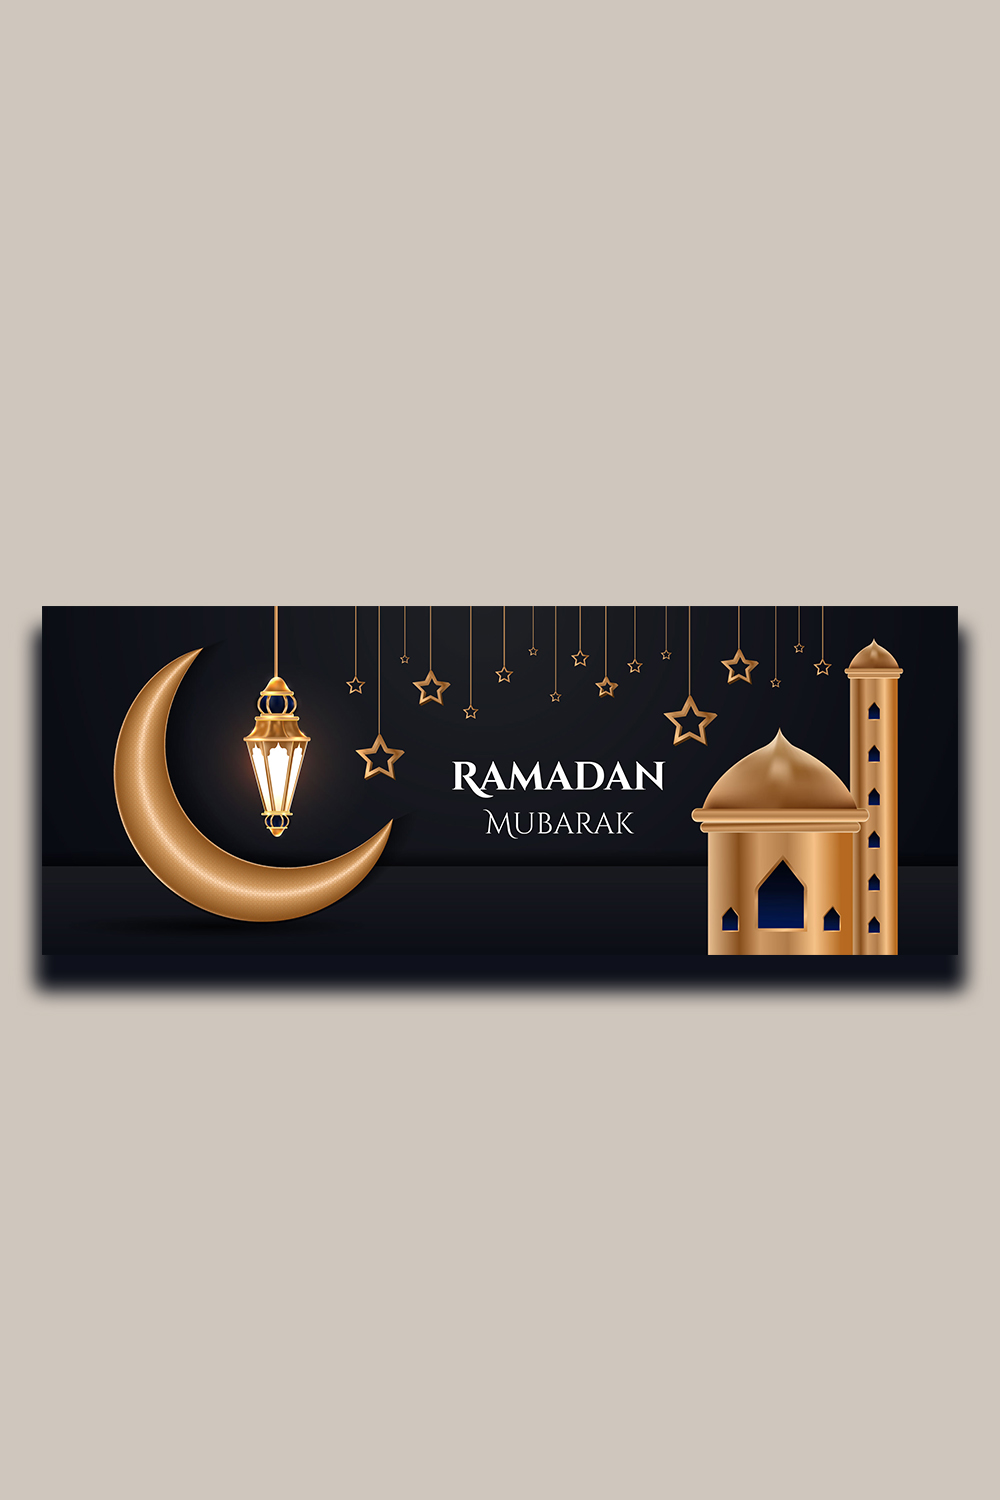 Ramadan Mubarak Greetings Social Media Cover pinterest preview image.